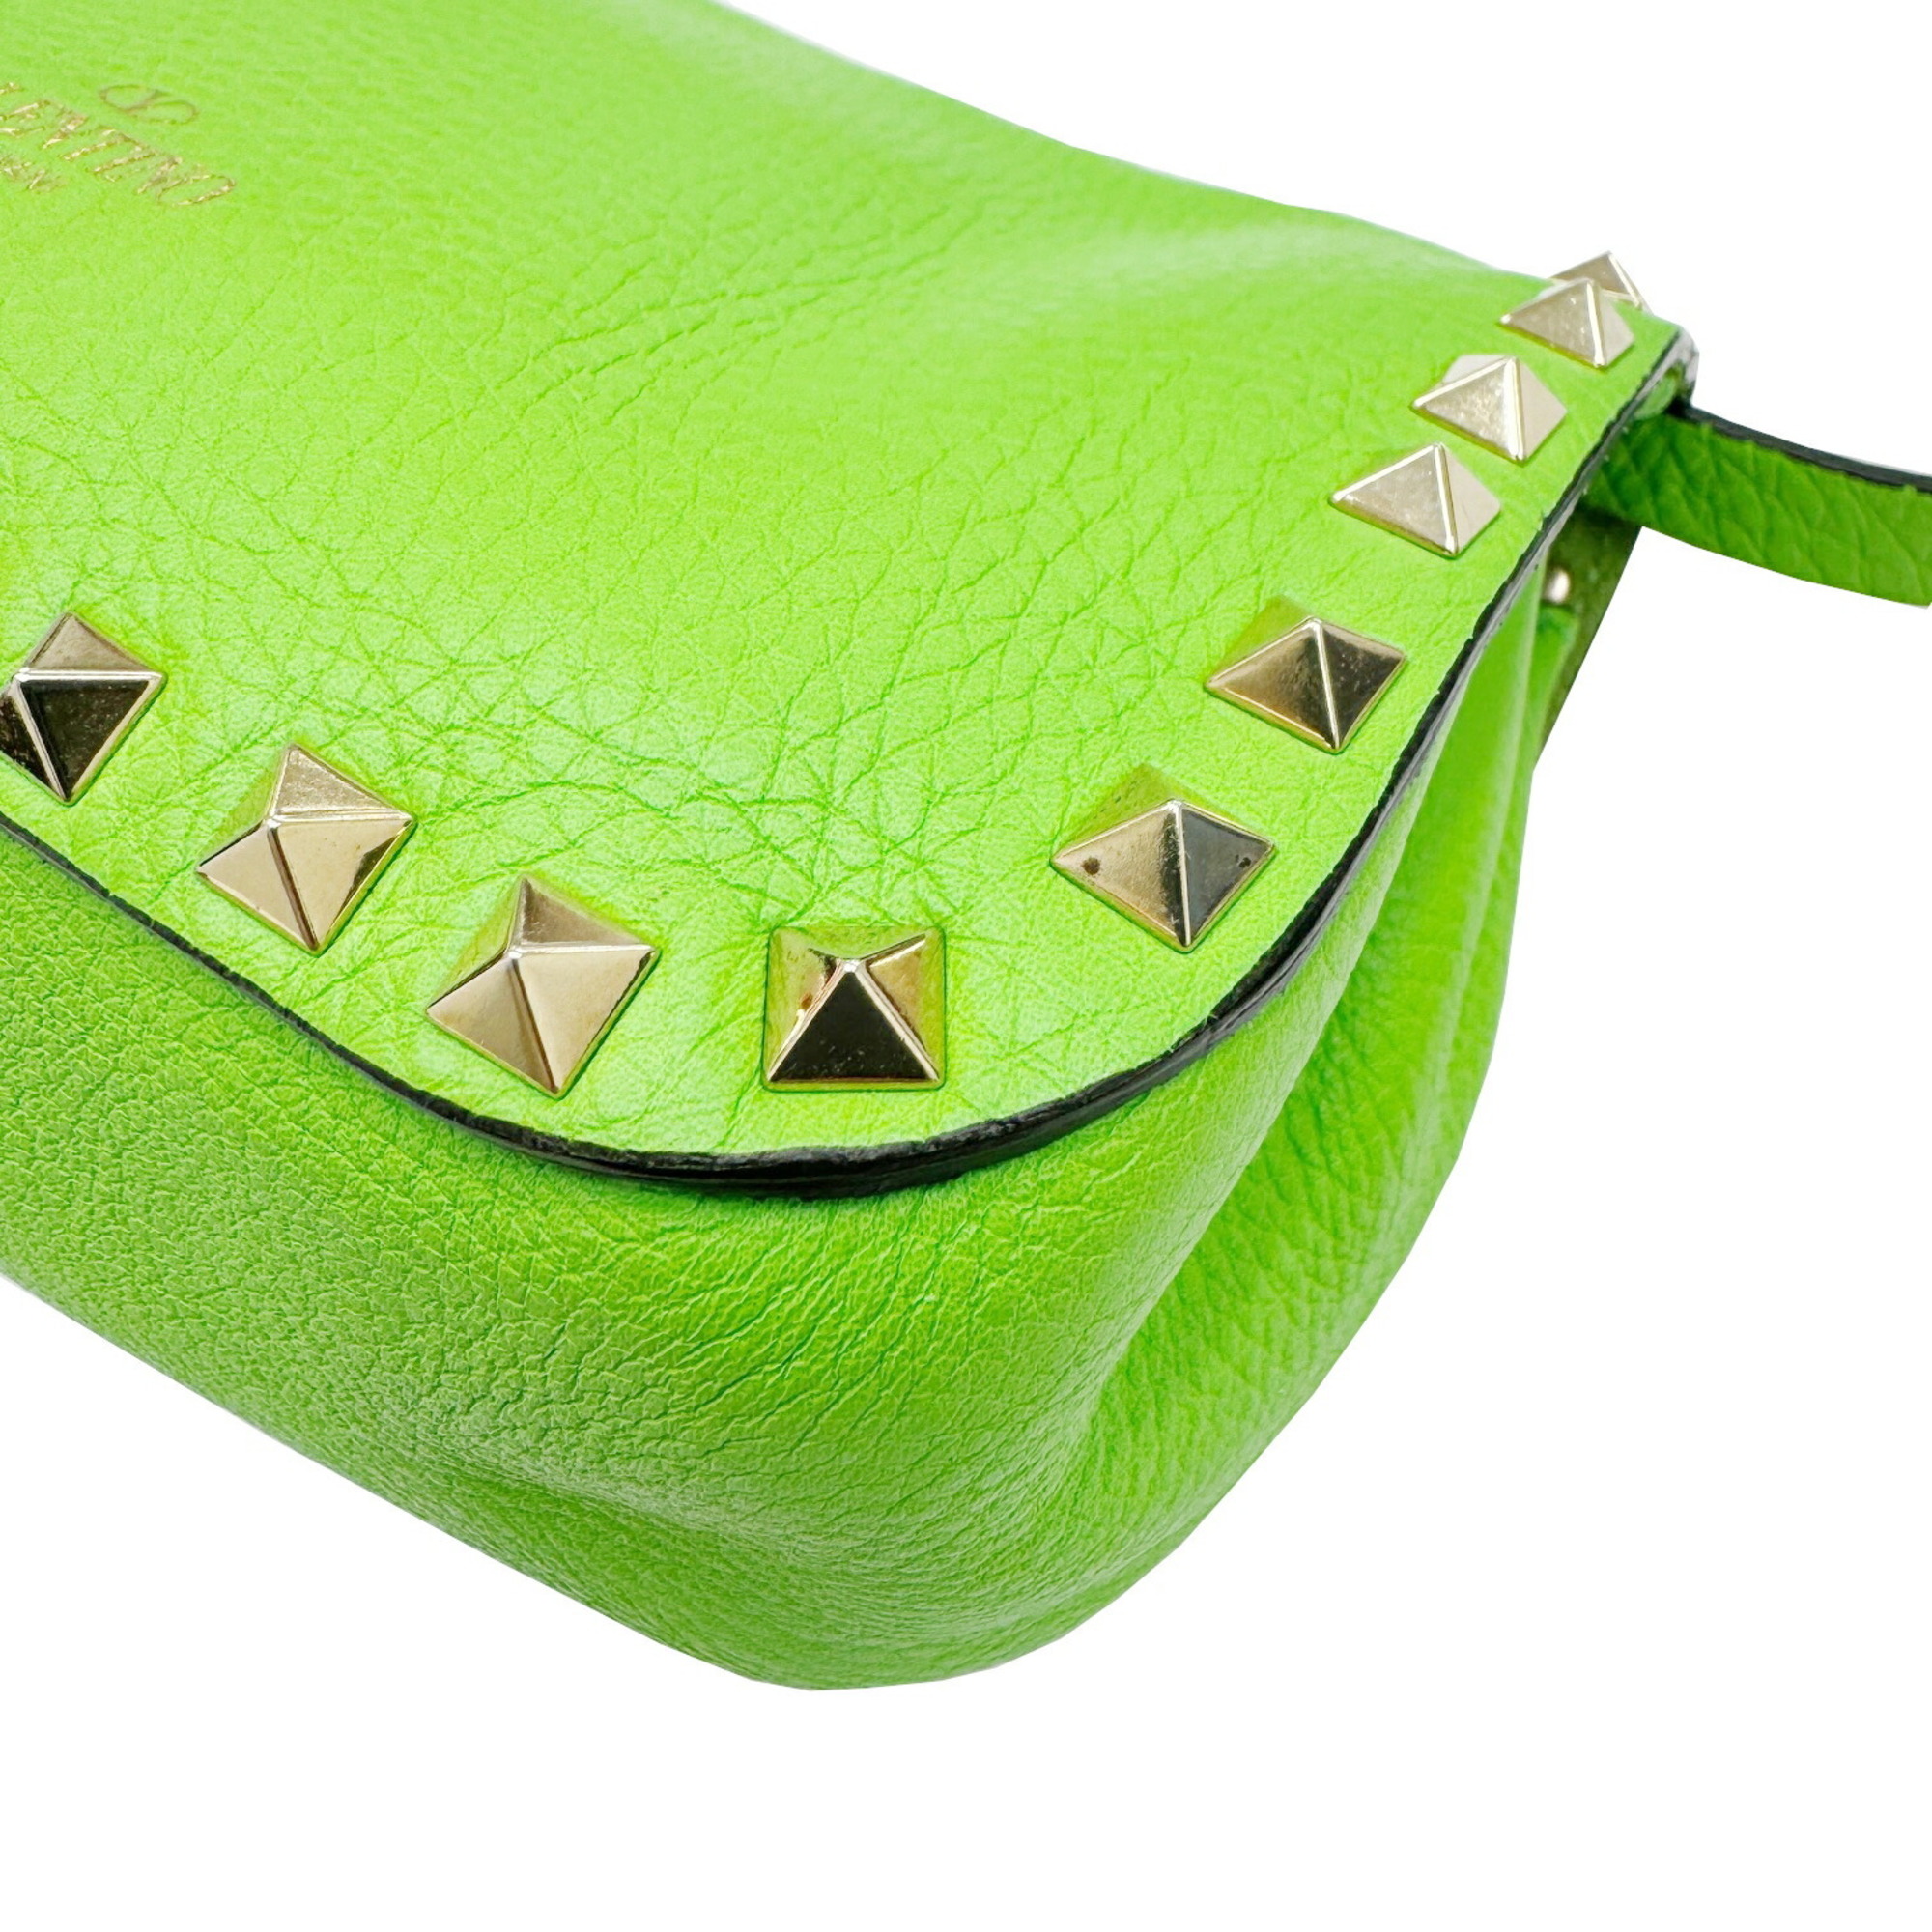 VALENTINO GARAVANI Rockstud Shoulder Bag Small Green Women's